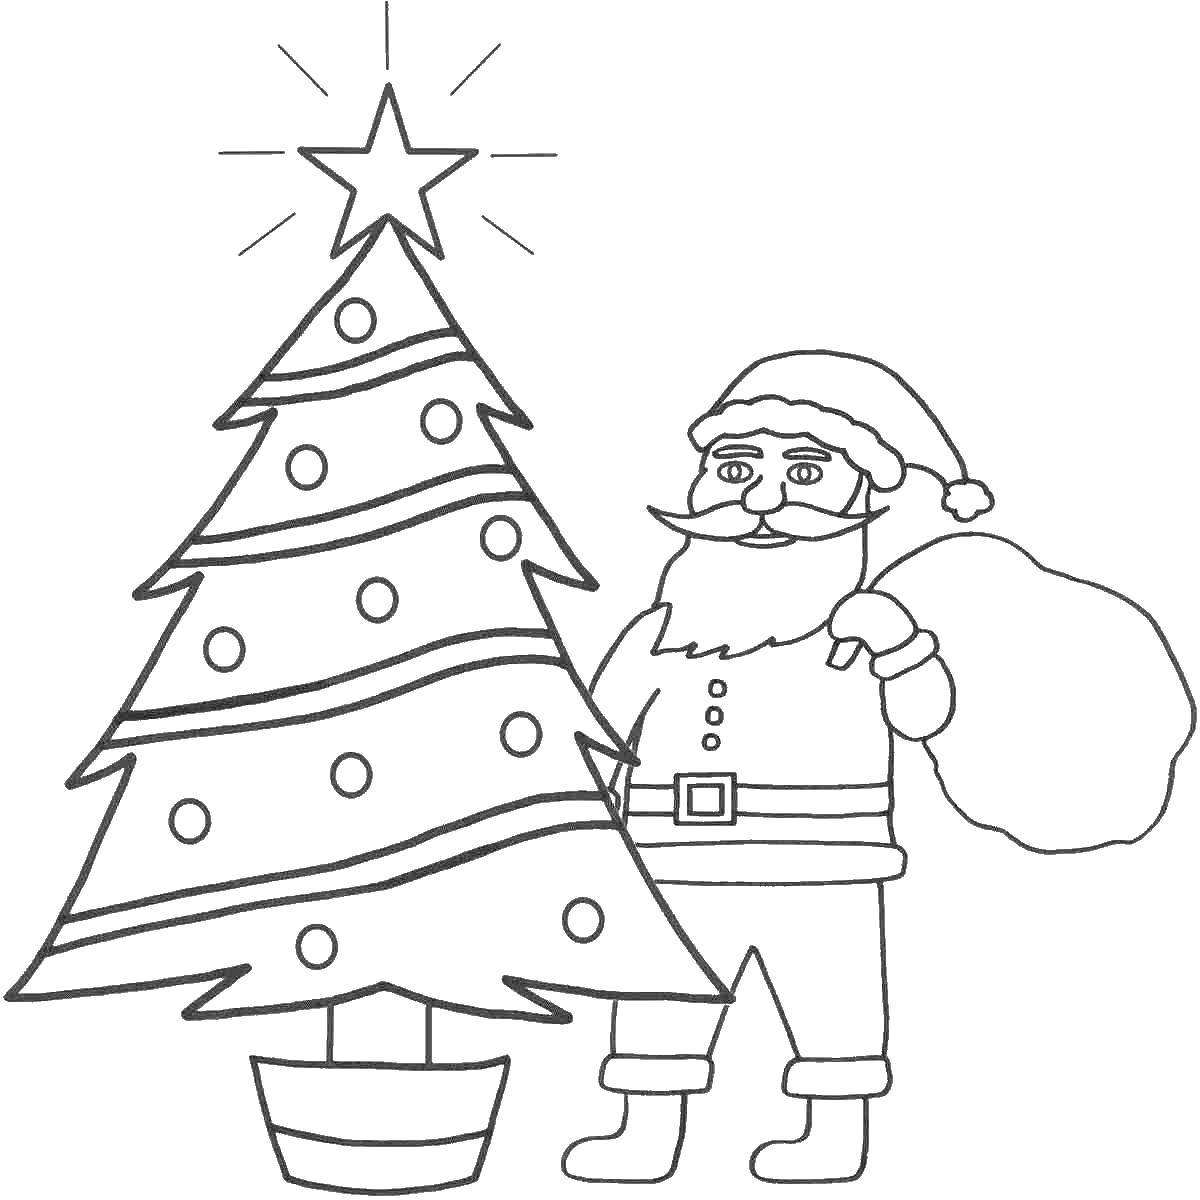 Название: Раскраска Санта клаус с рождественской елкой. Категория: рождество. Теги: рождество, елка, санта.